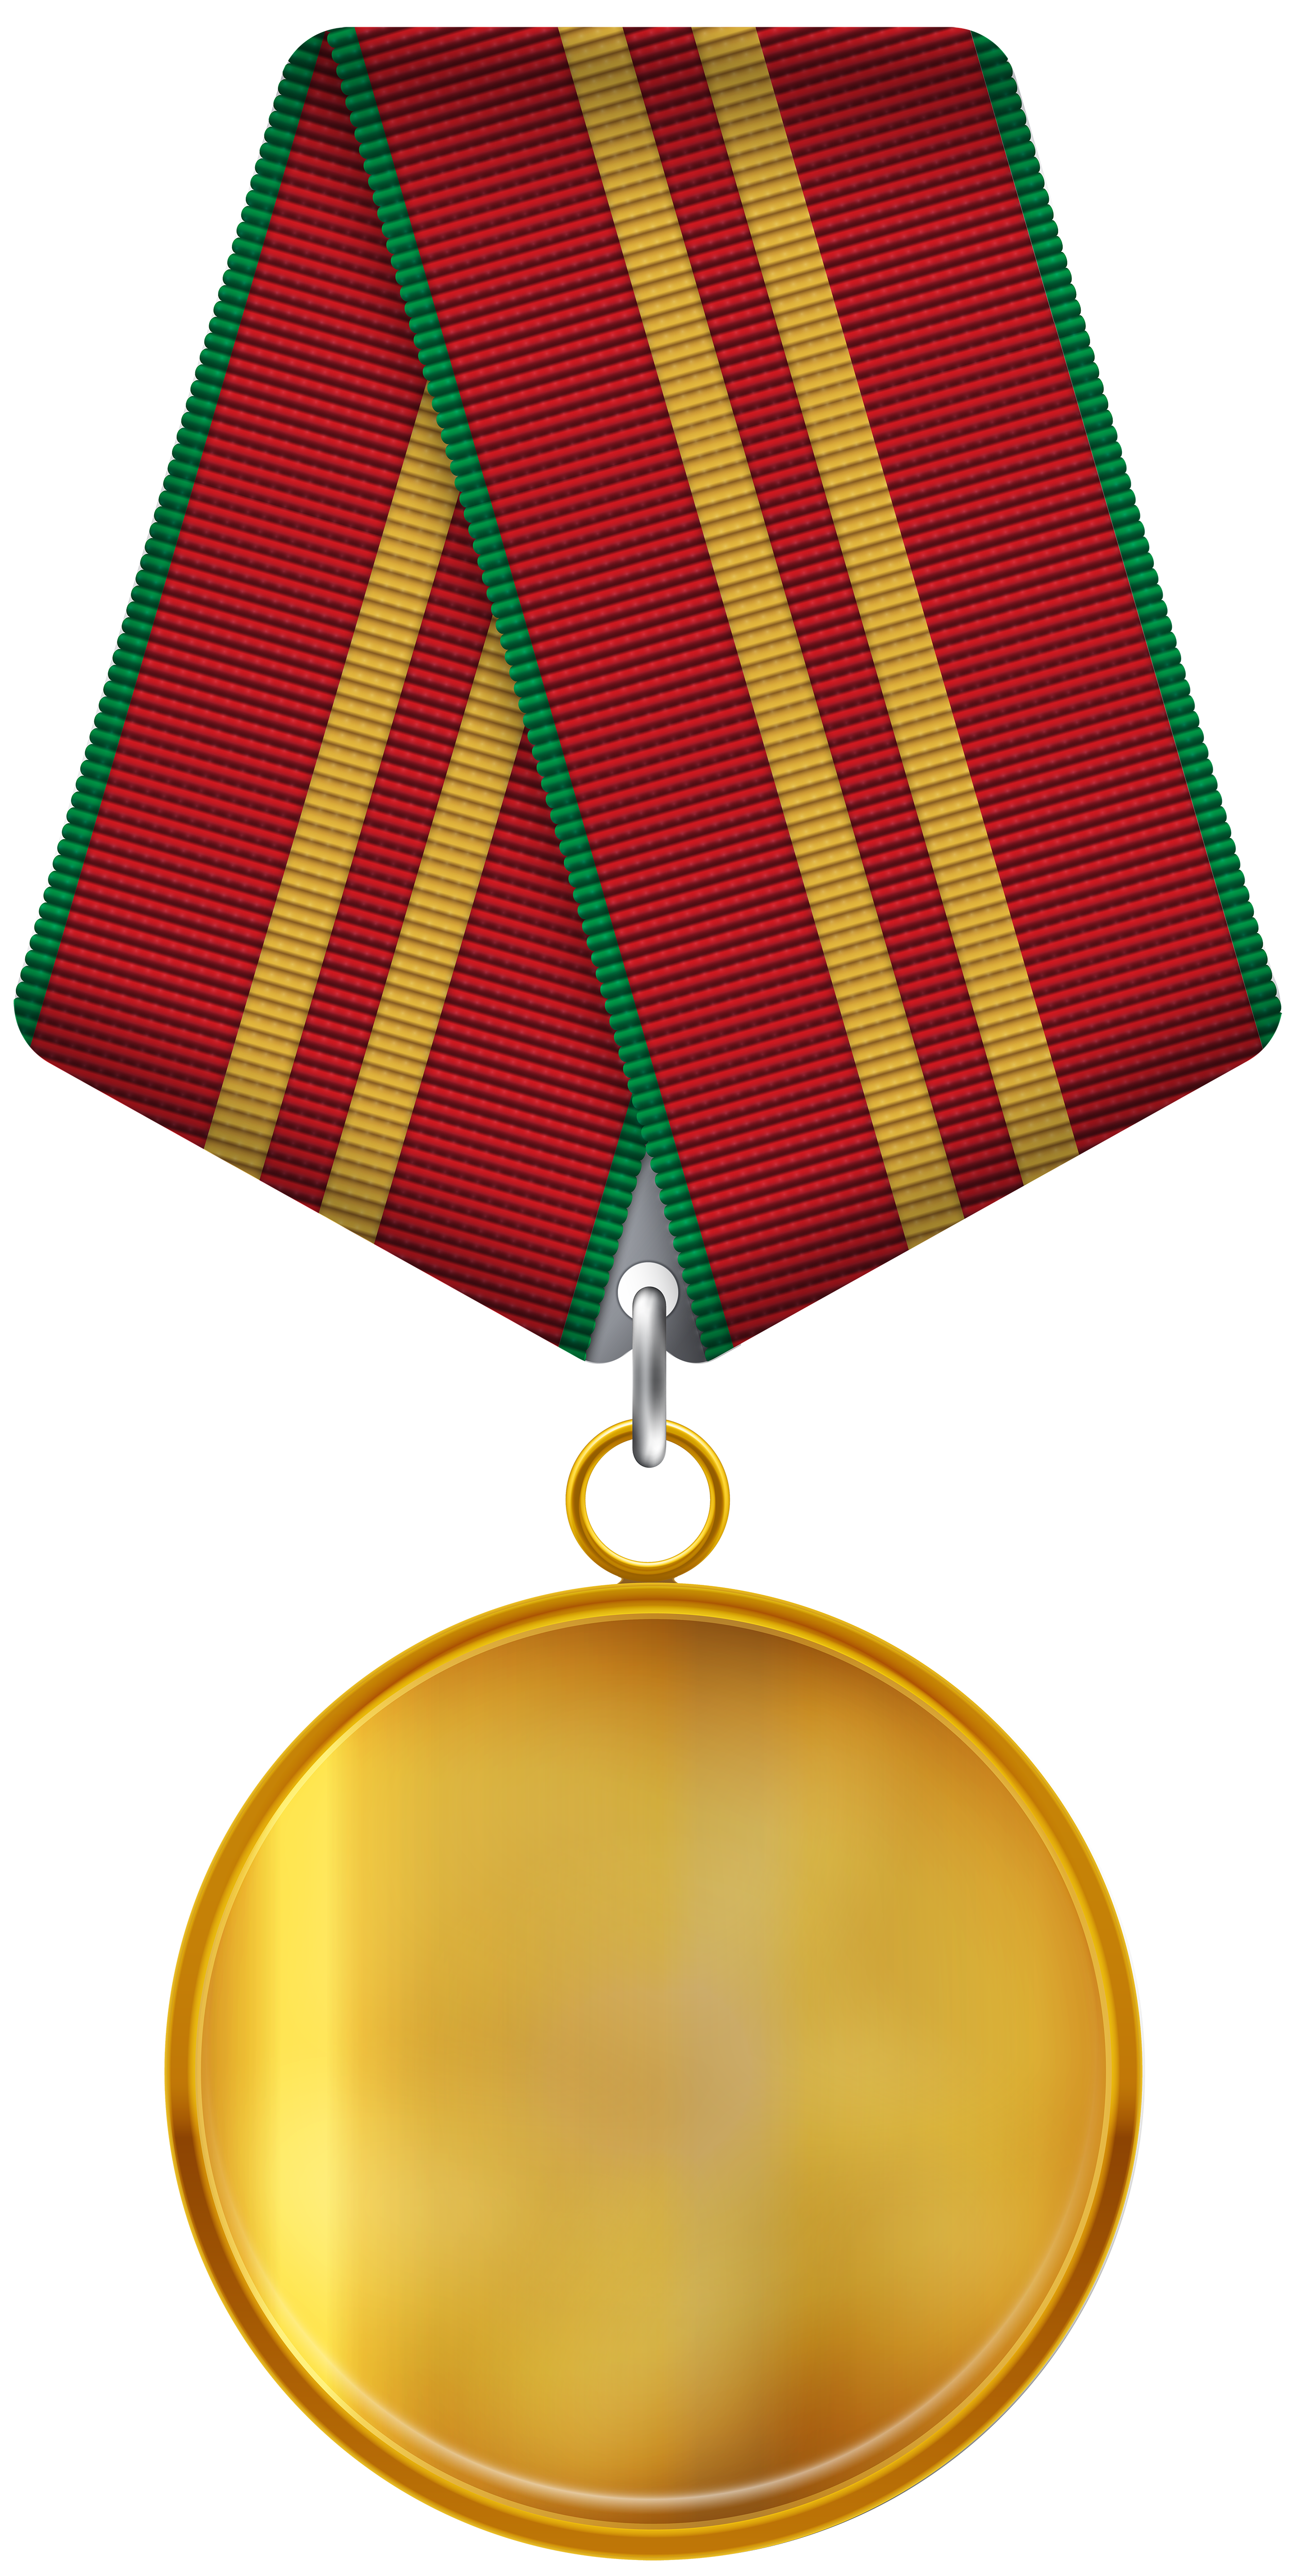 Huy chương